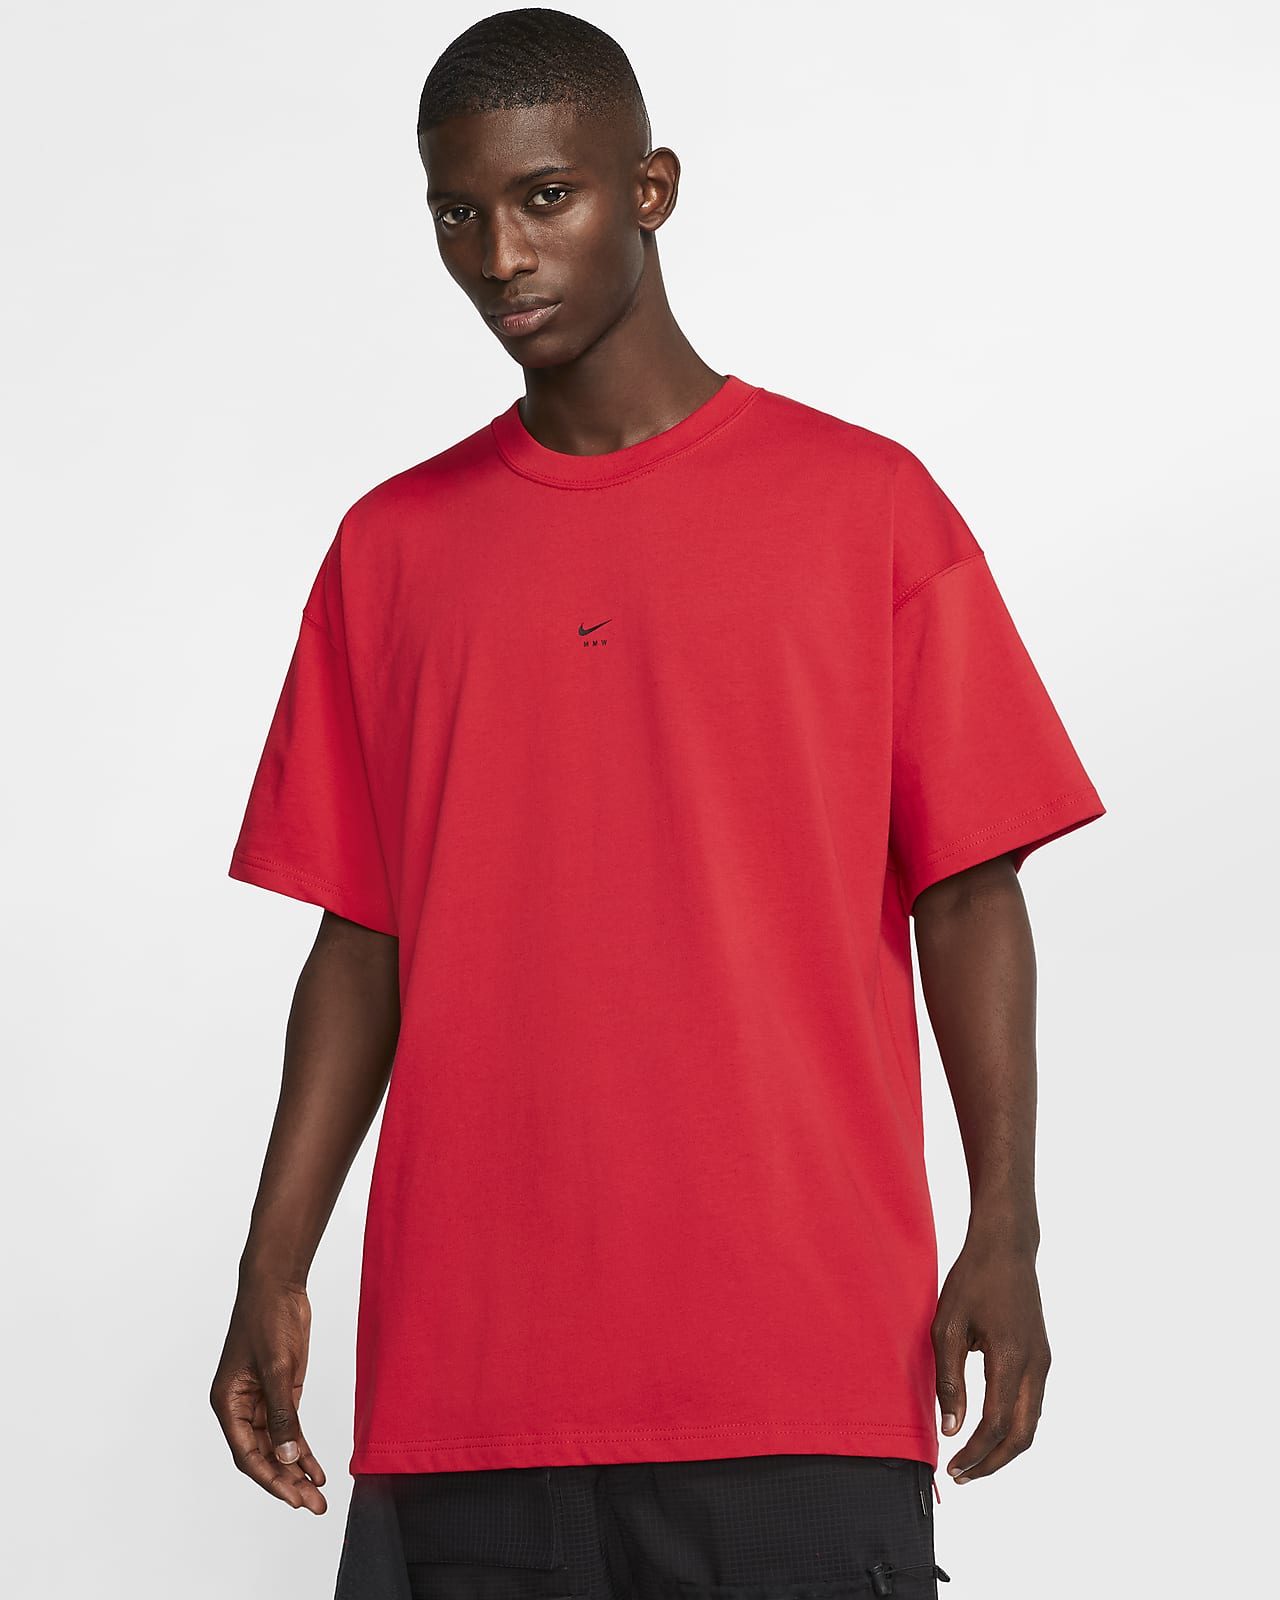 Nike x MMW 短袖T 恤。Nike TW